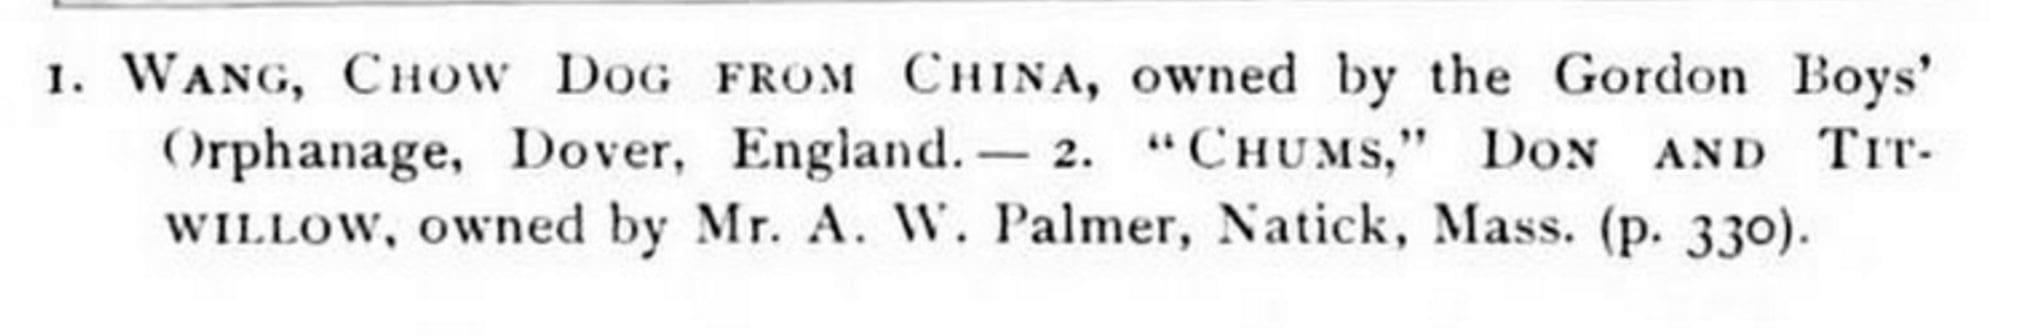 Chinese Gordon Wang 1865